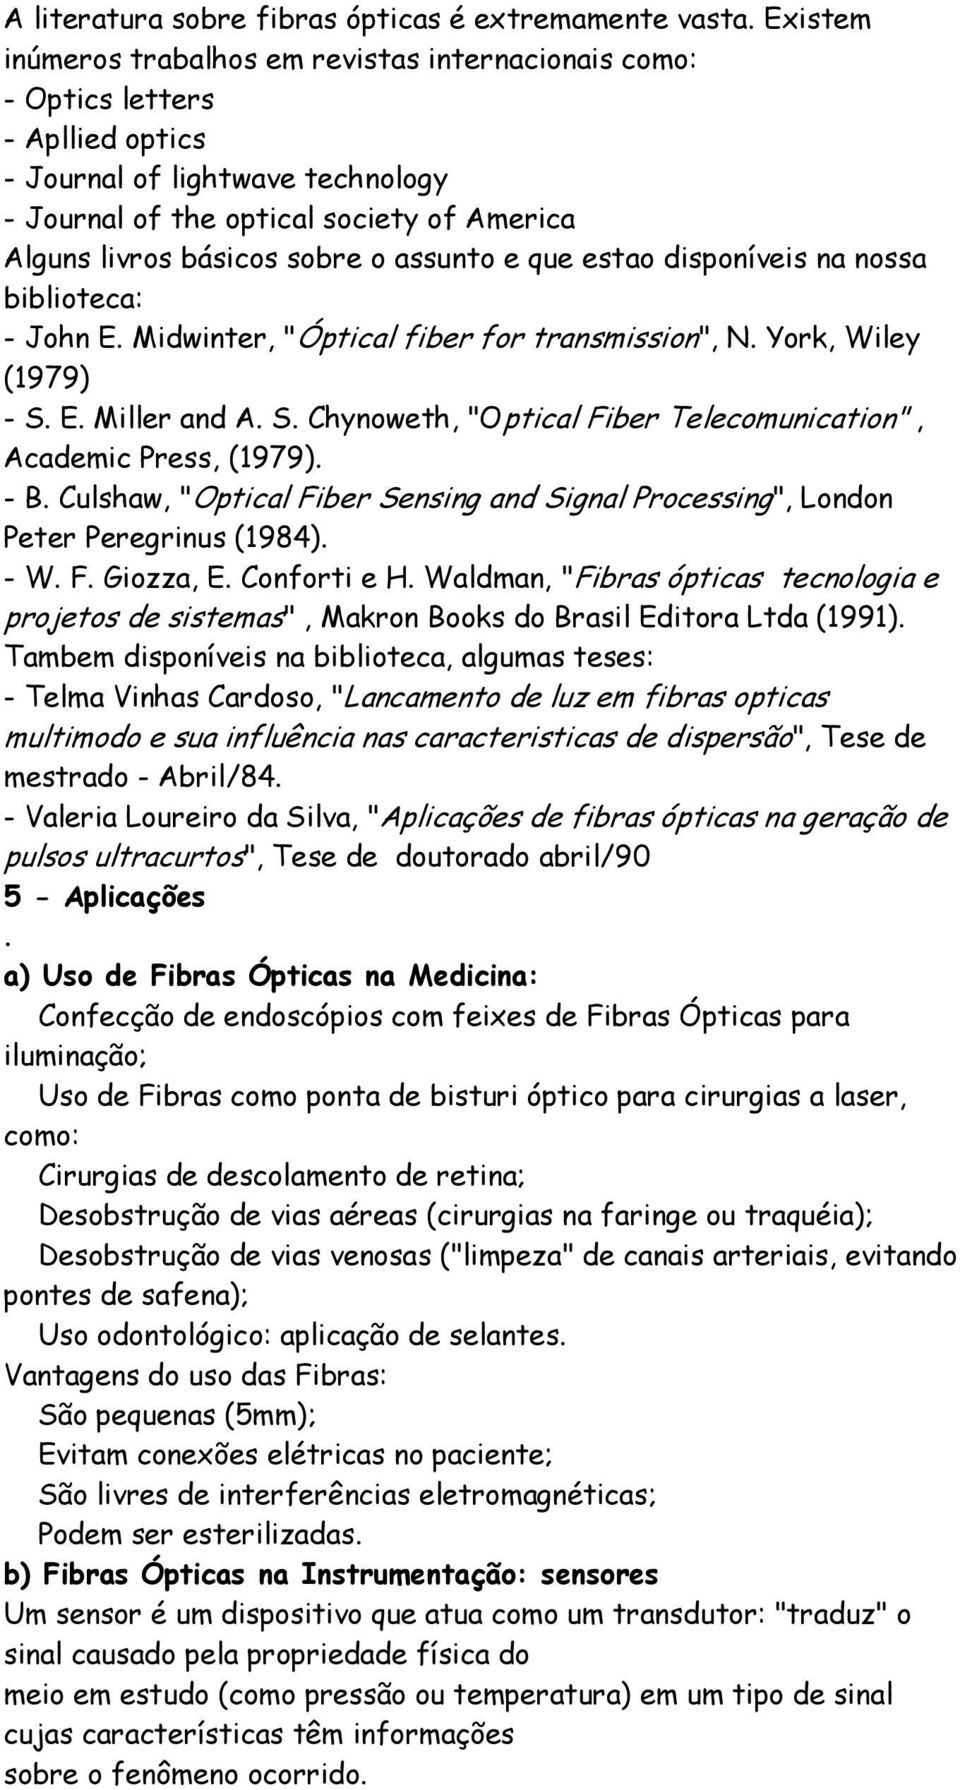 and A S Chynoweth, "Optical Fiber Telecomunication", Academic Press, (1979) - B Culshaw, "Optical Fiber Sensing and Signal Processing", London Peter Peregrinus (1984) - W F Giozza, E Conforti e H